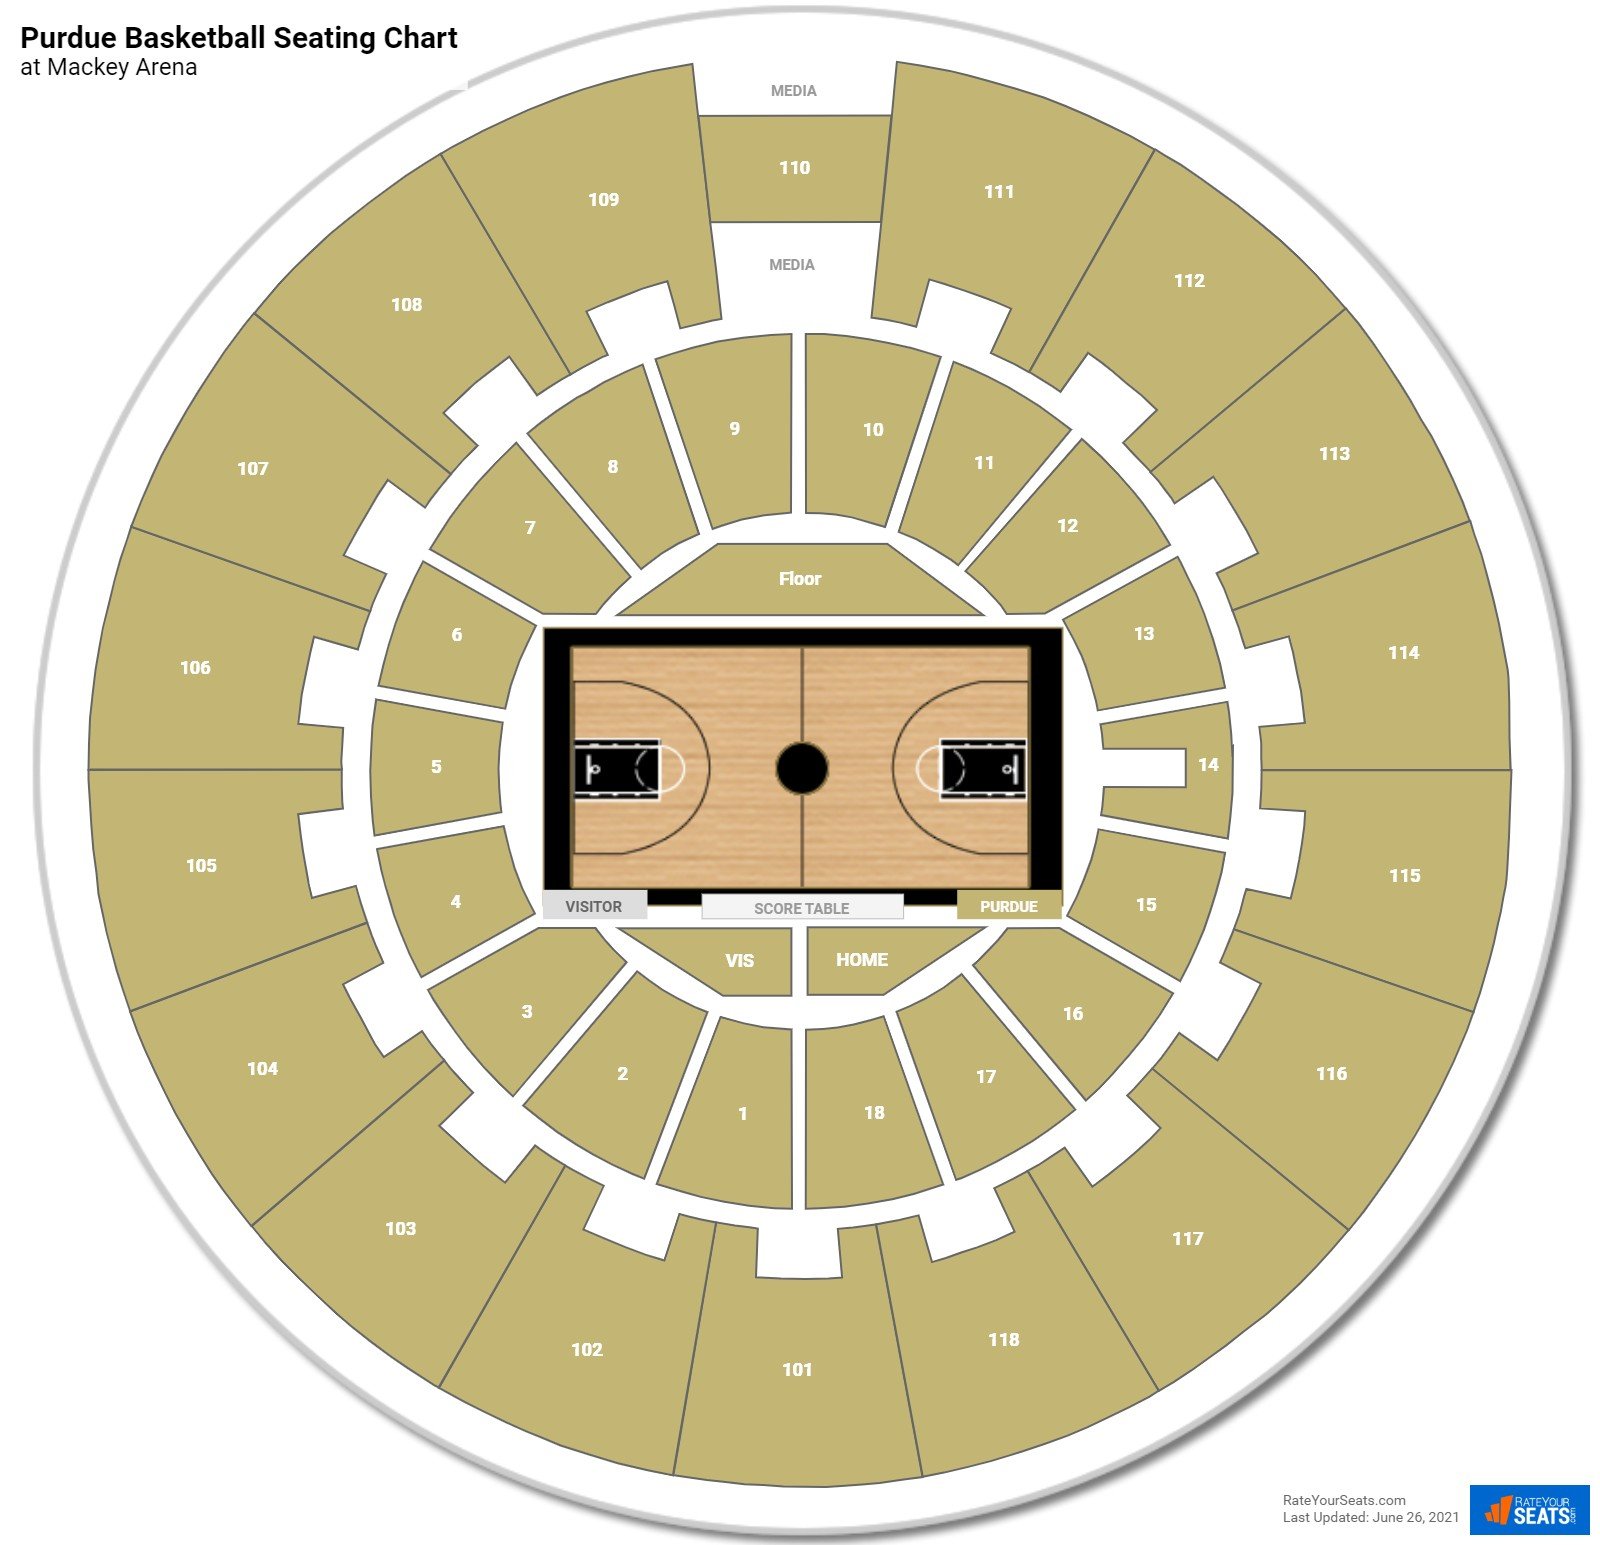 Purdue Boilermakers Seating Chart at Mackey Arena